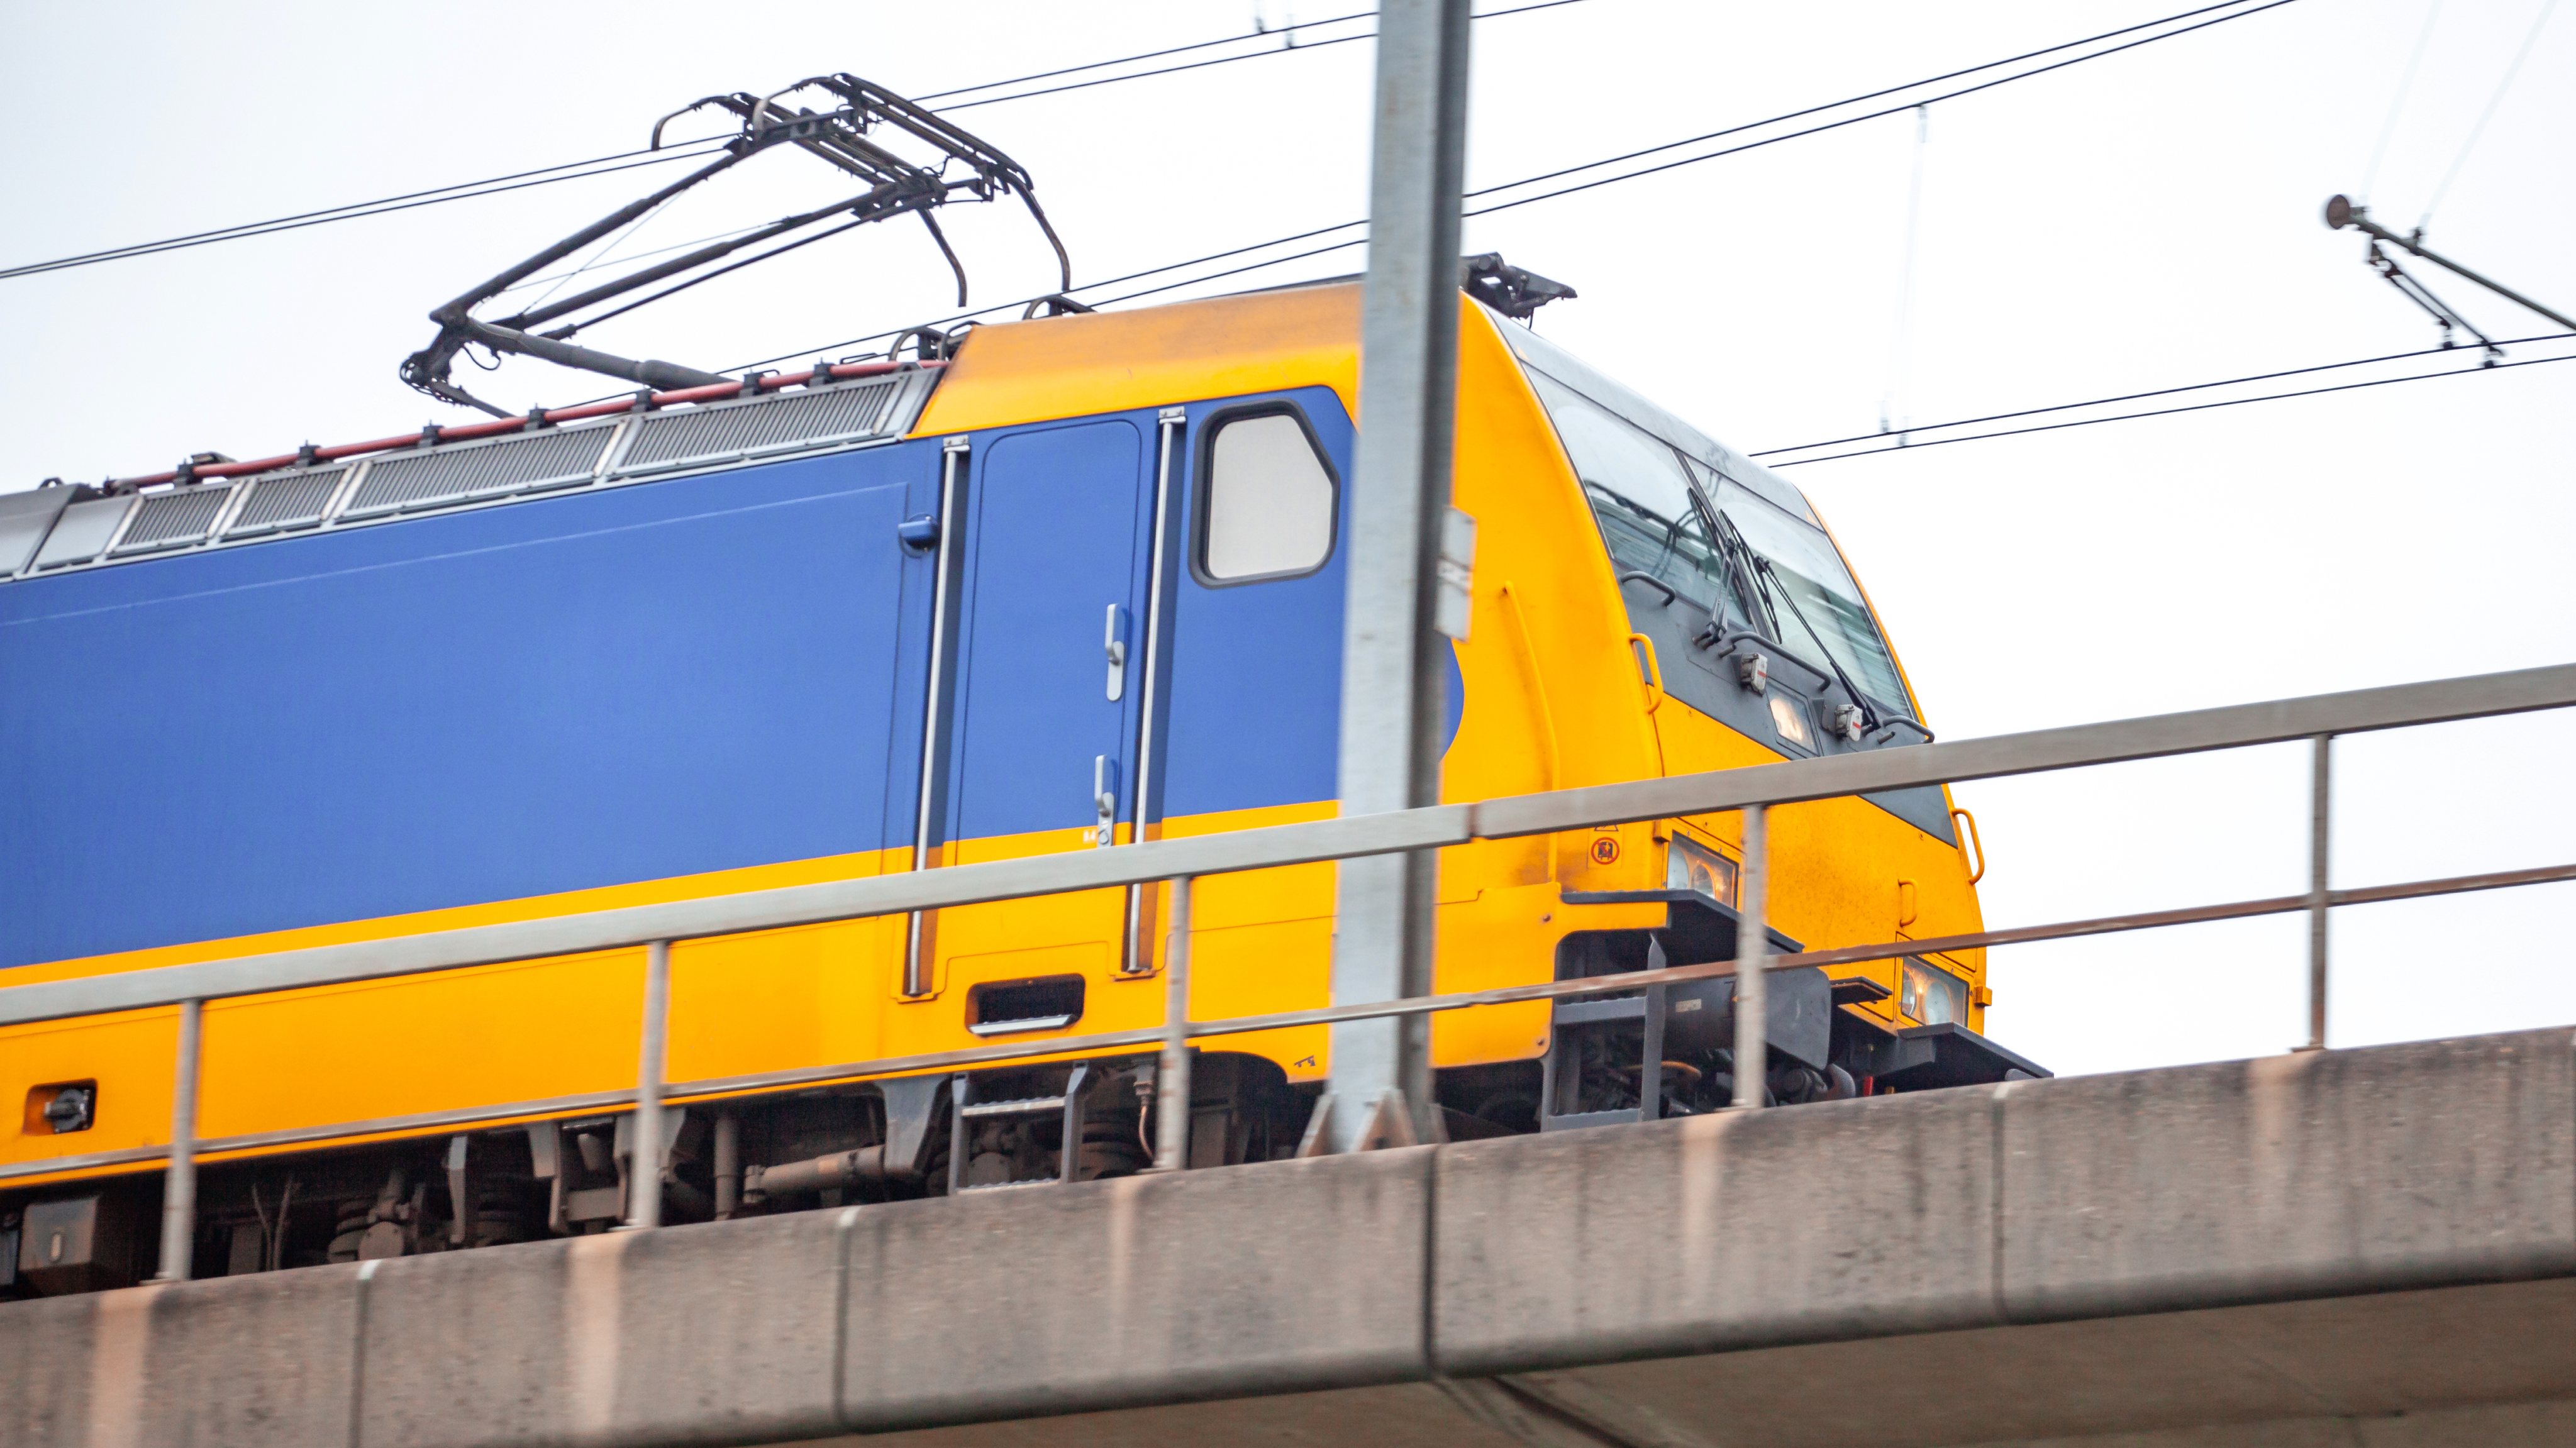 Skytrain in city Amsterdam. Passenger train in Netherlands.